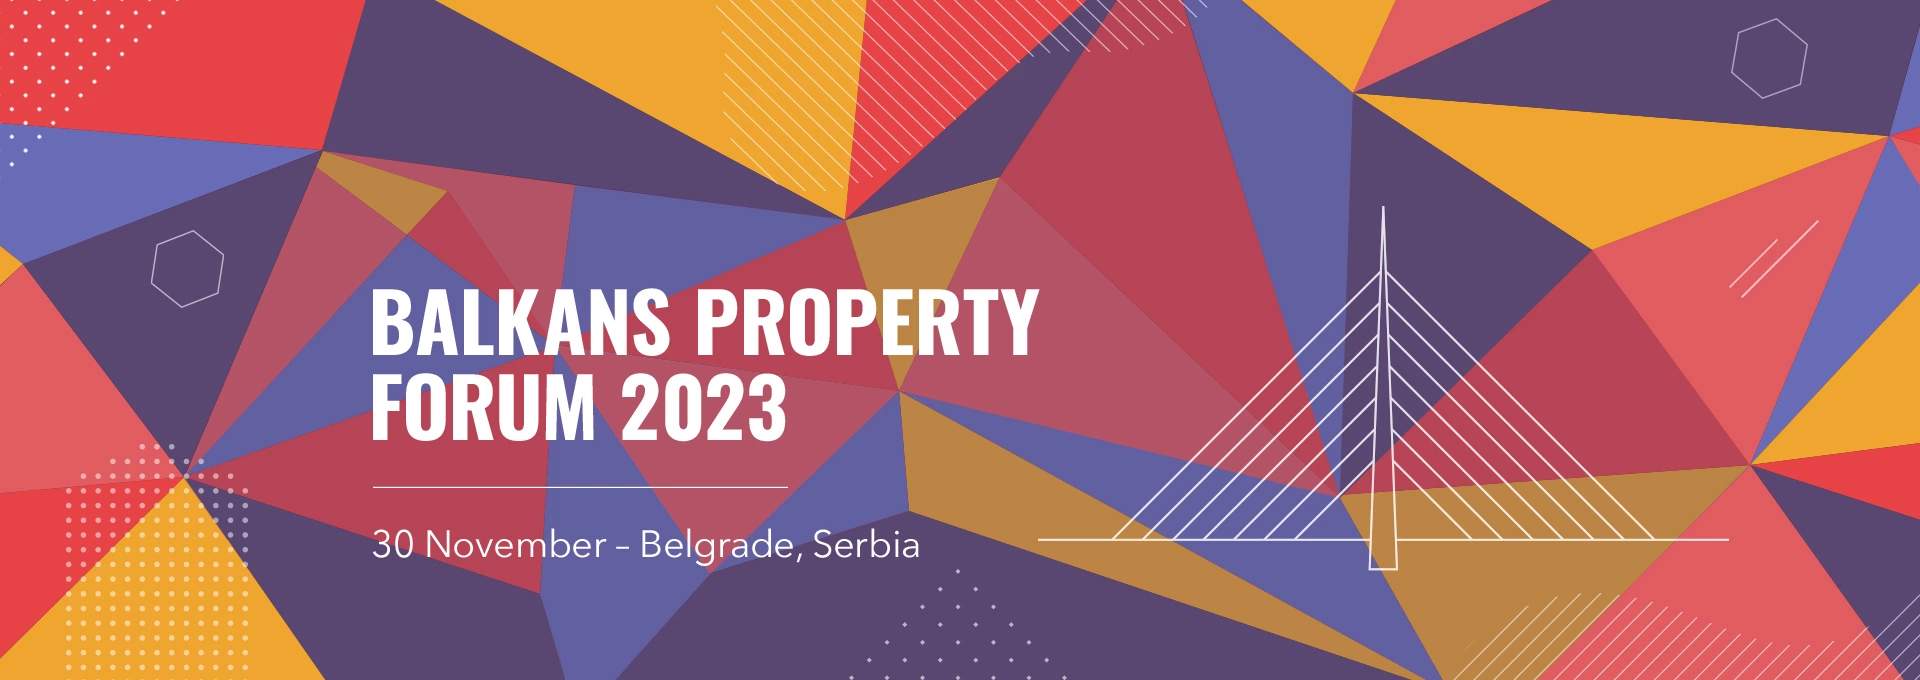 Balkans Property Forum 2023 - Belgrade, Serbia